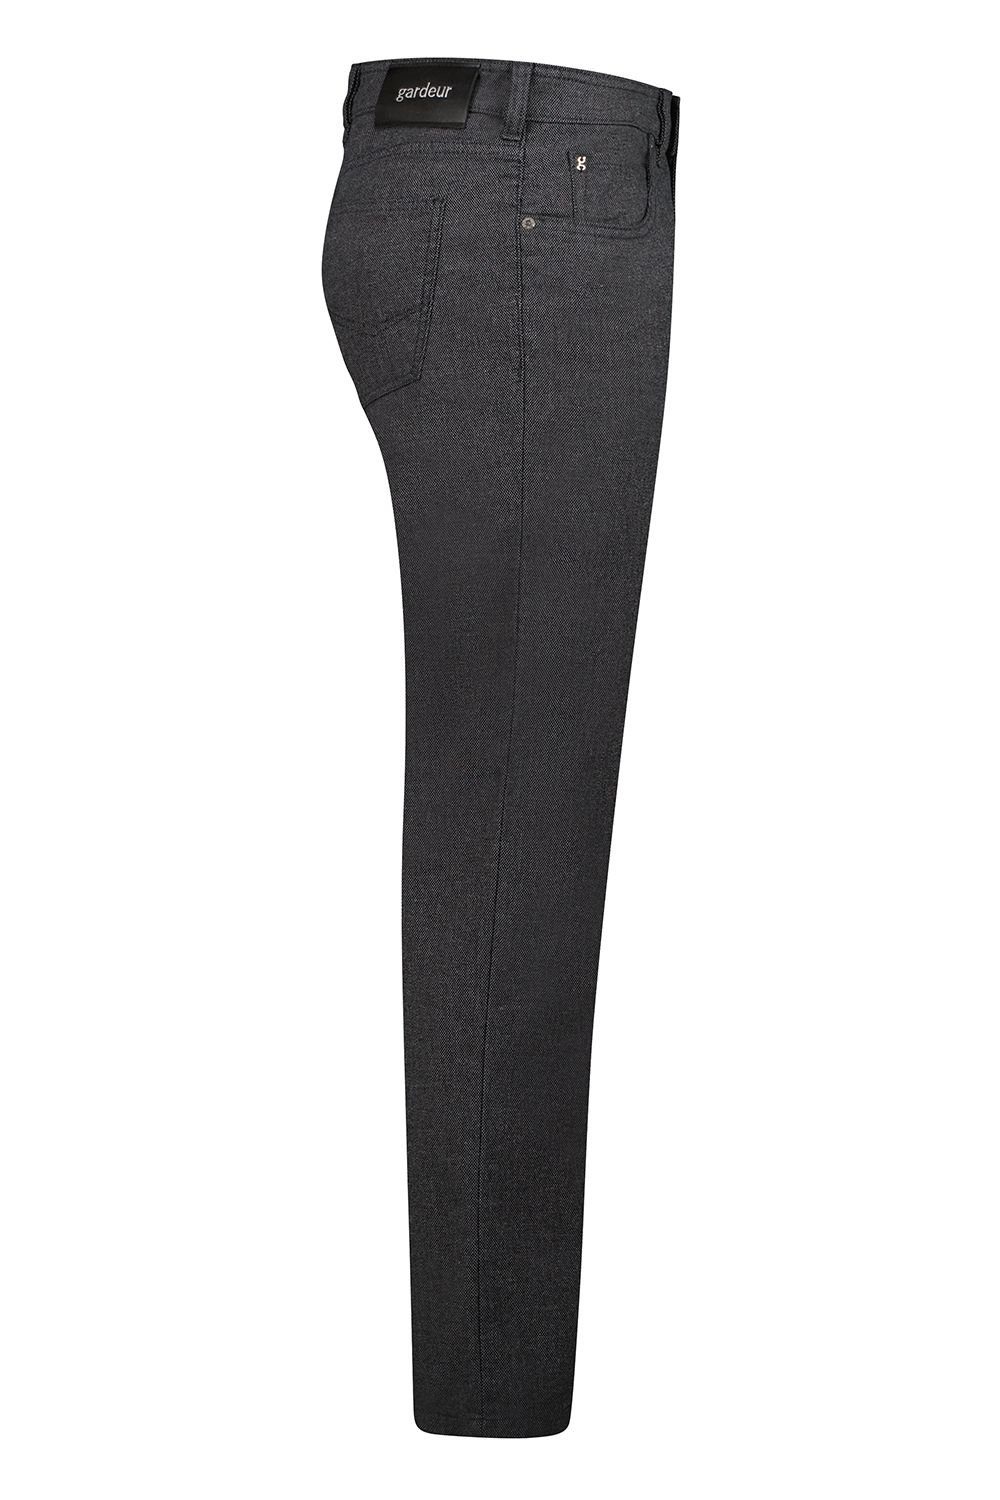 GARDEUR Atelier 1097 5-Pocket-Jeans Asphalt